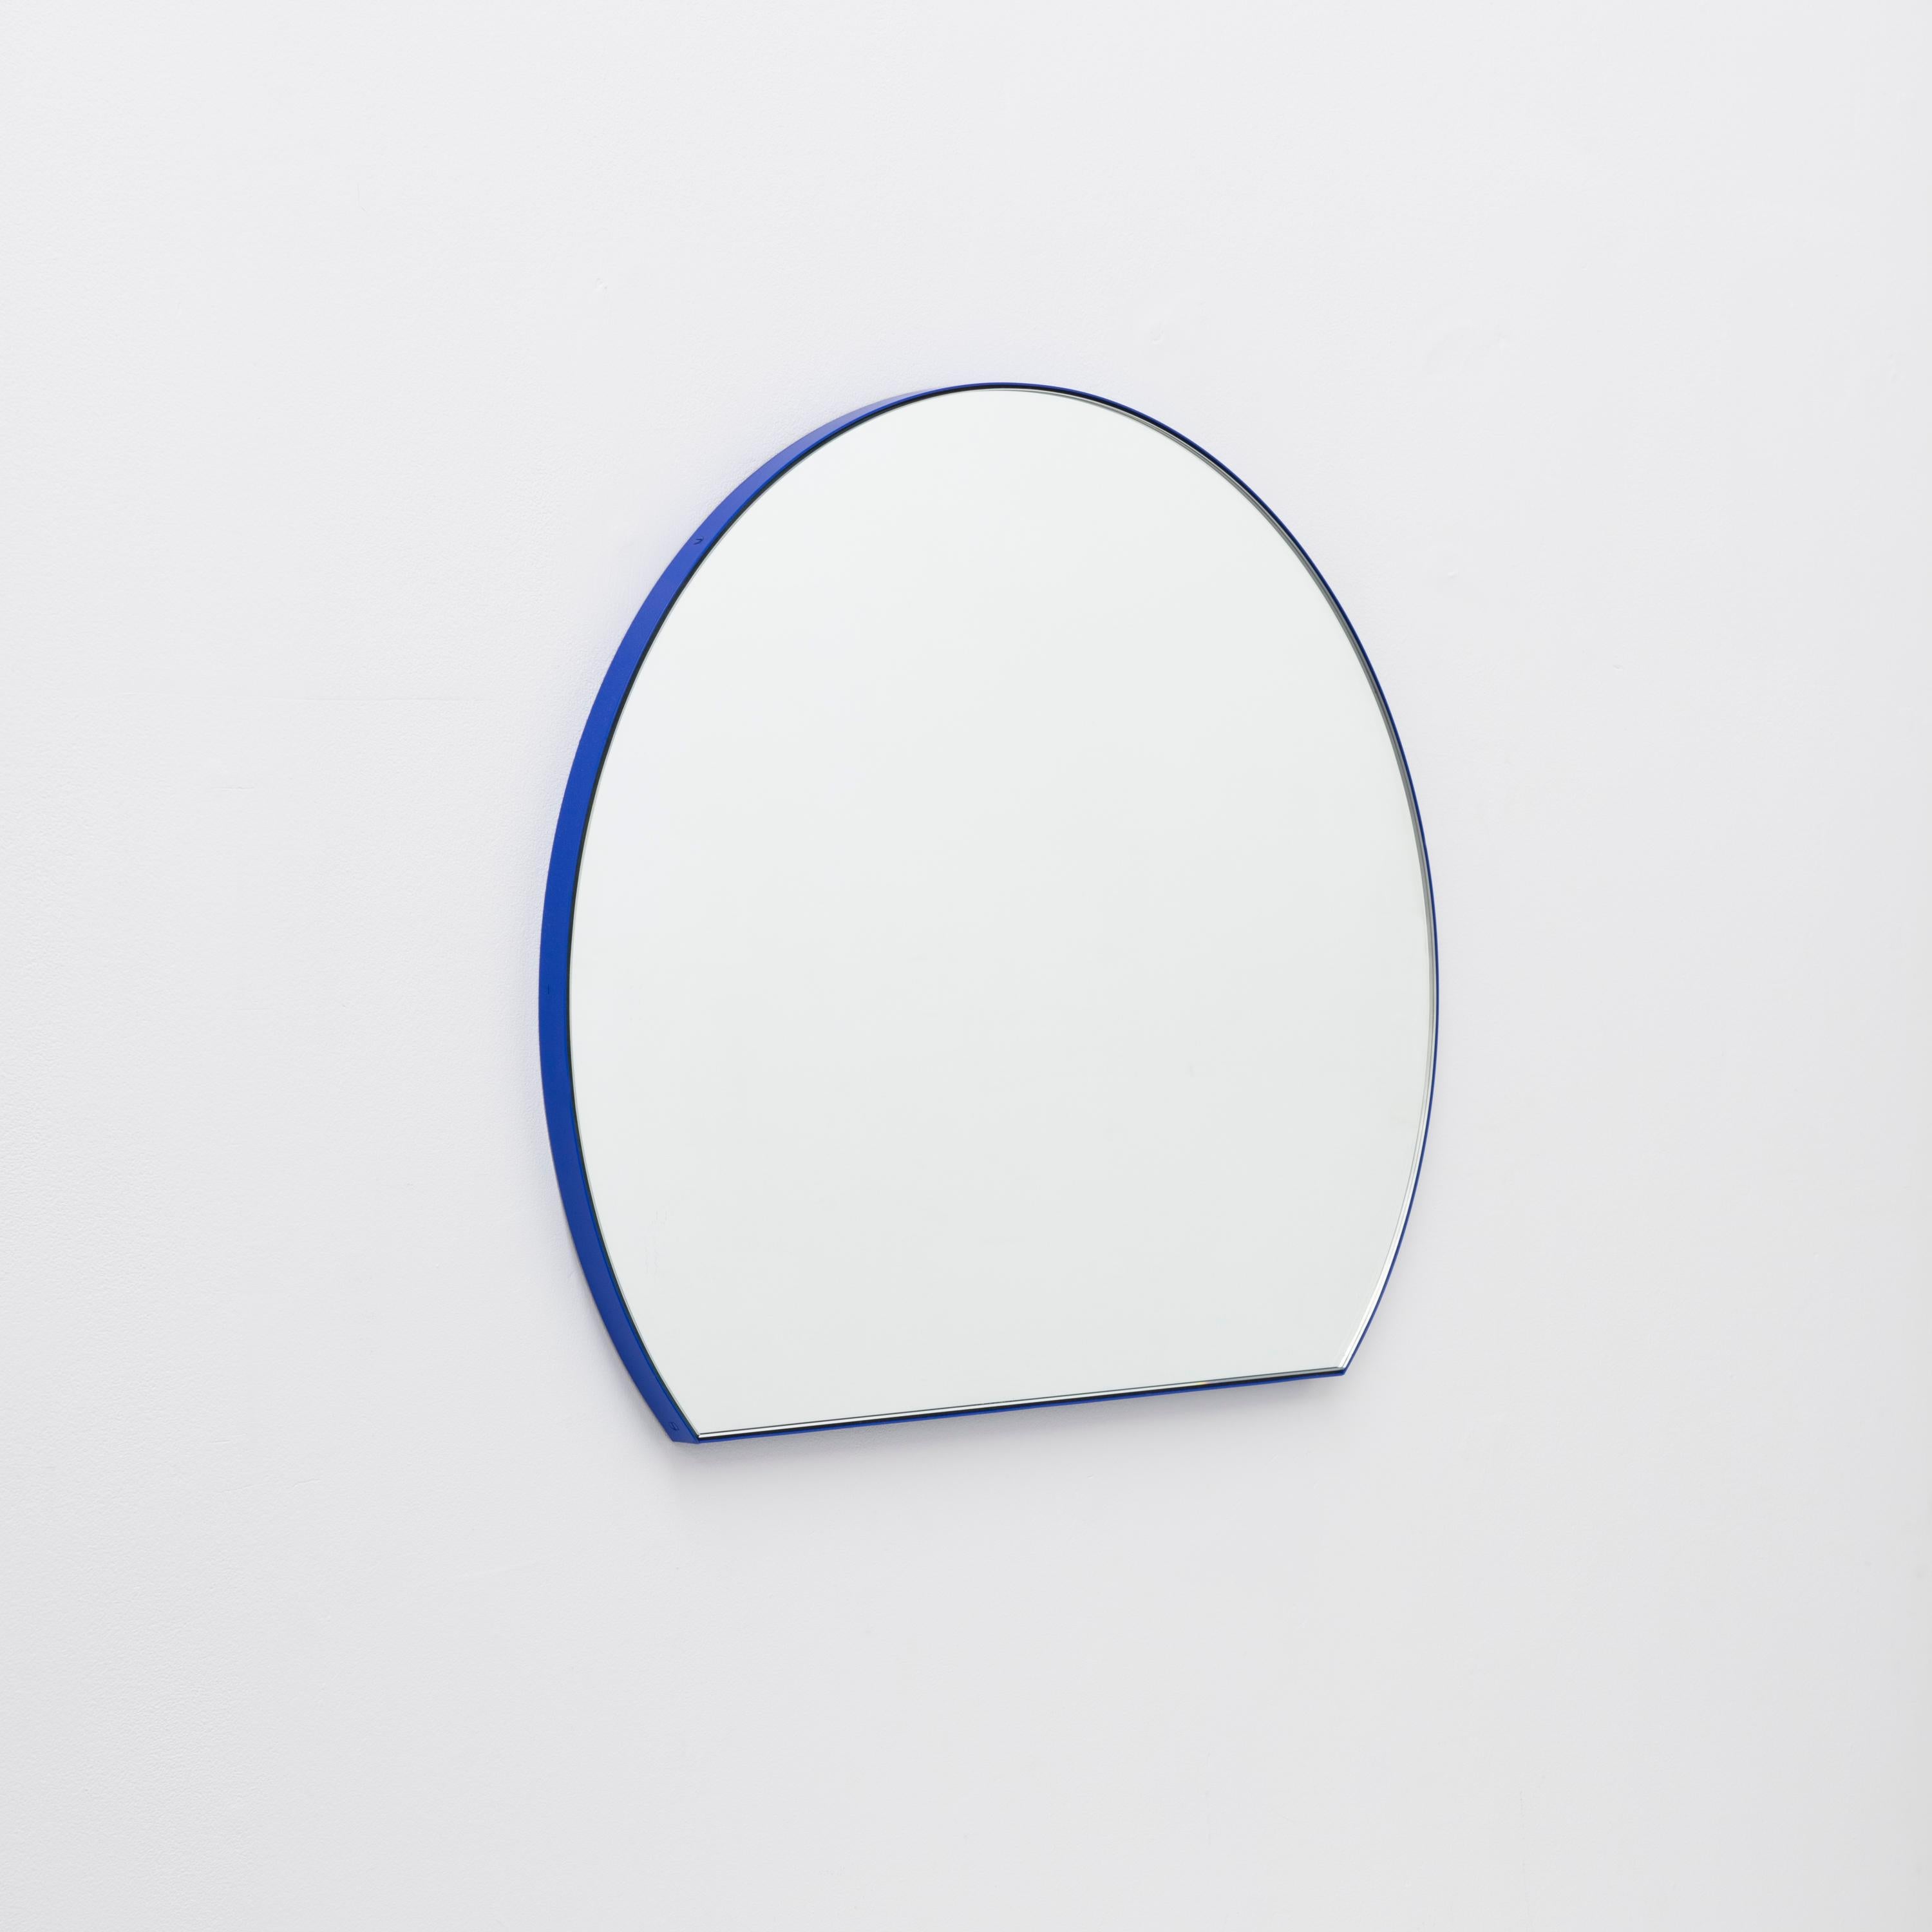 Powder-Coated Orbis Trecus Cropped Round Modern Mirror with Blue Frame, Medium For Sale